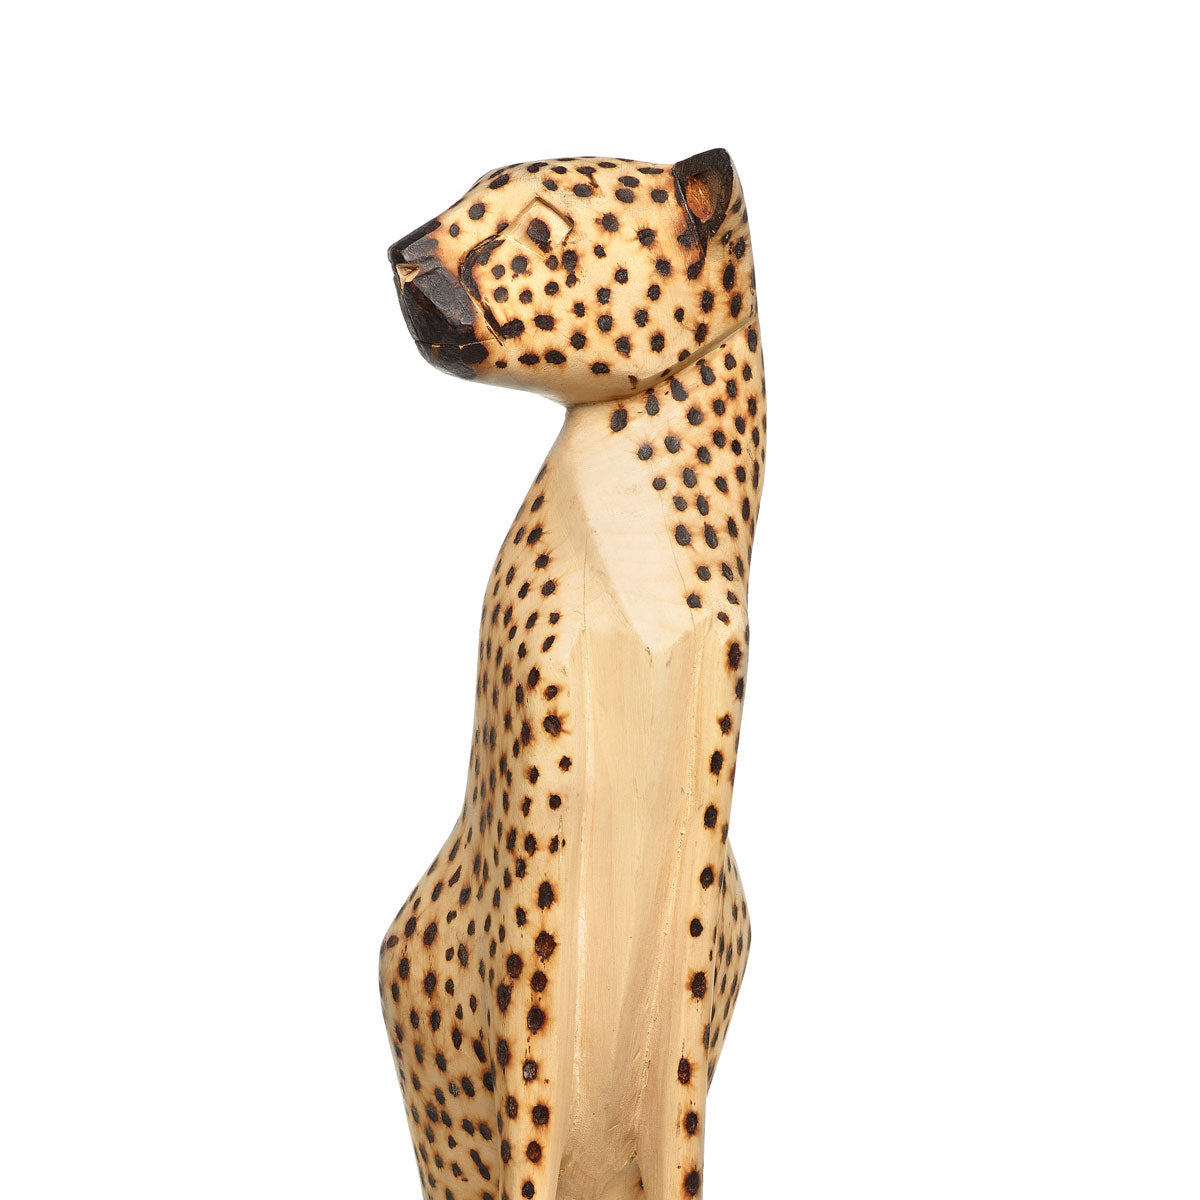 Vintage Hand-Painted Ceramic Cheetah Sculpture